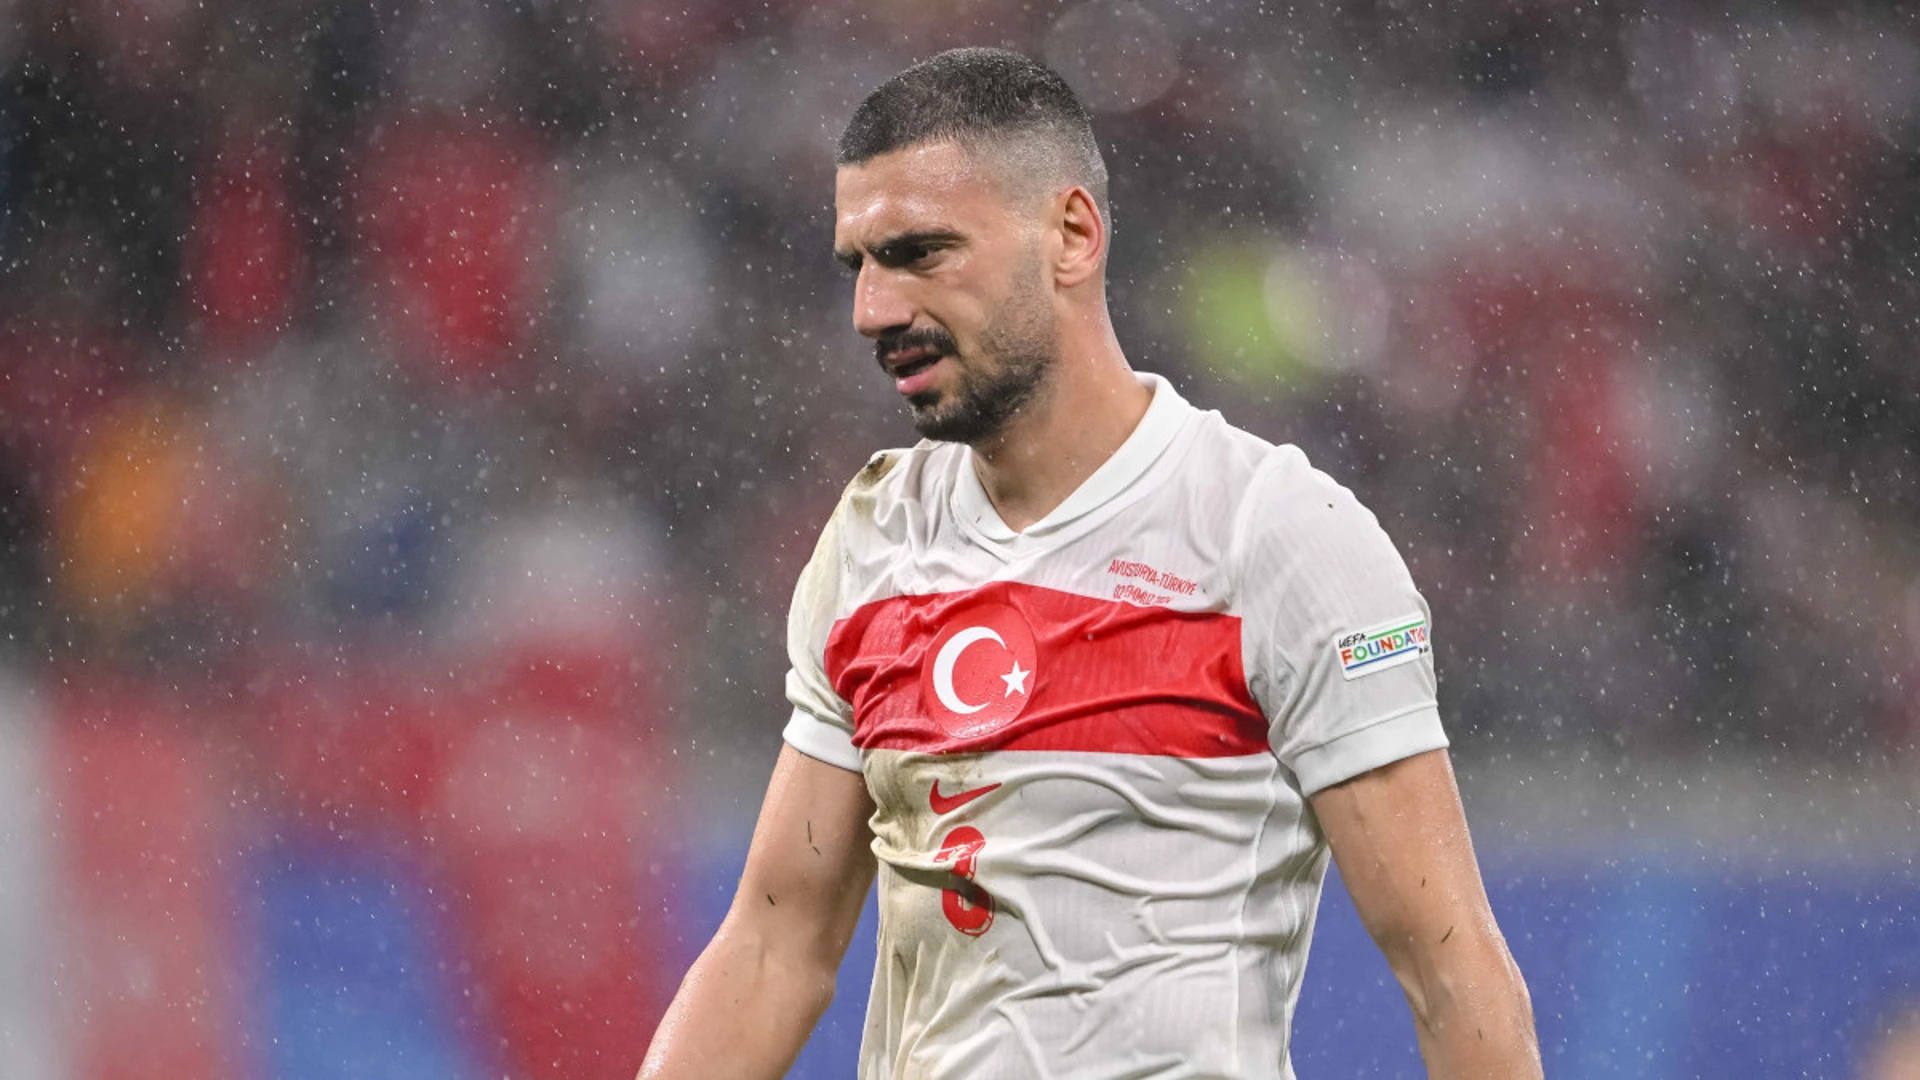 Germany summoned Turkish envoy over footballer's nationalist gesture